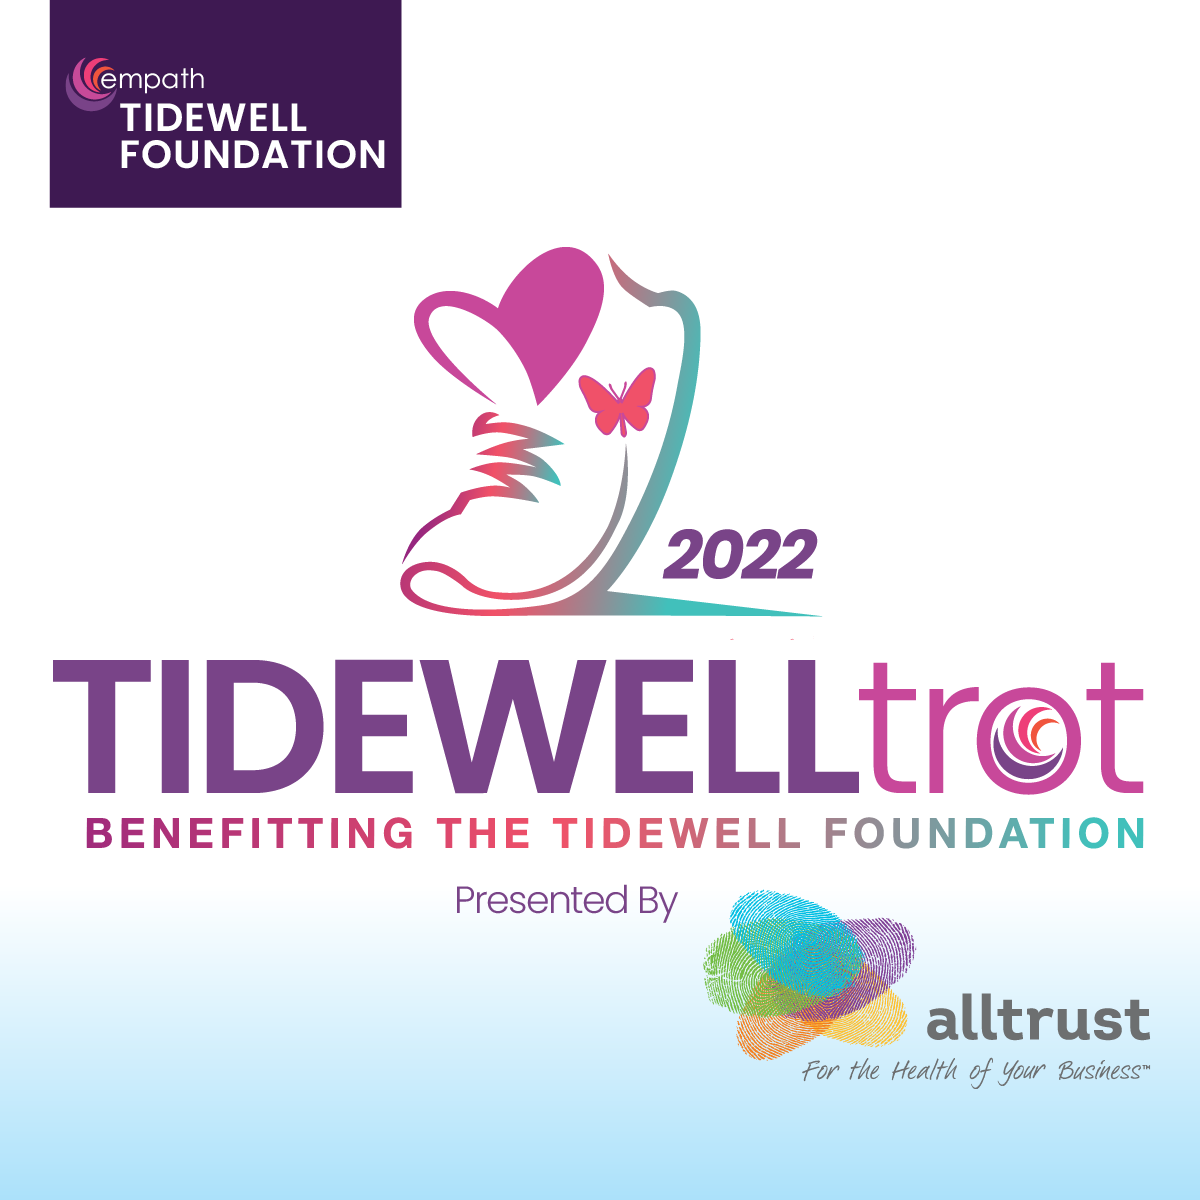 Tidewell Trot 5K and 1M Walk